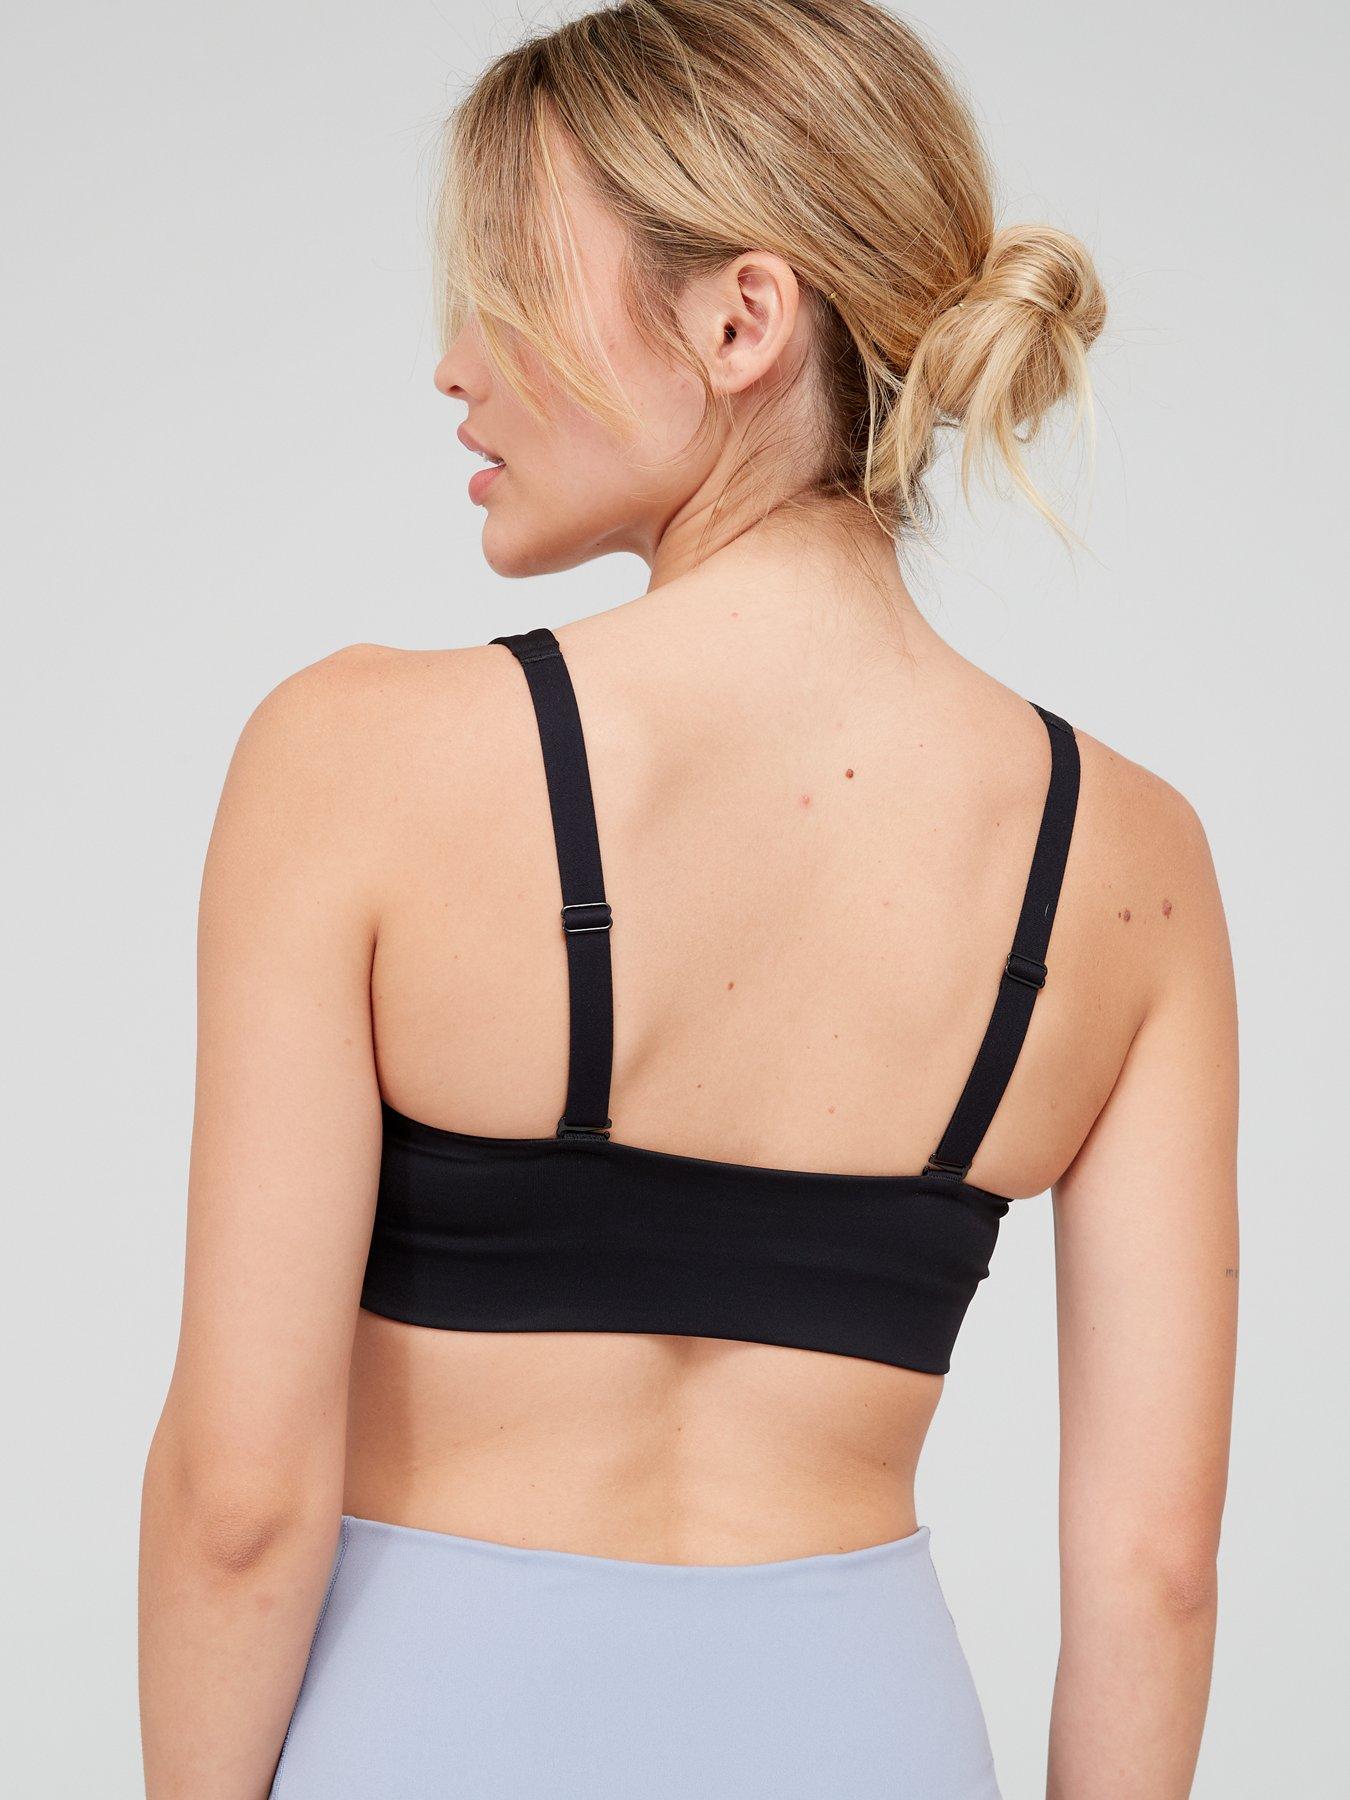 Nike Women's Nike Dri-FIT indy plunge cutout bra